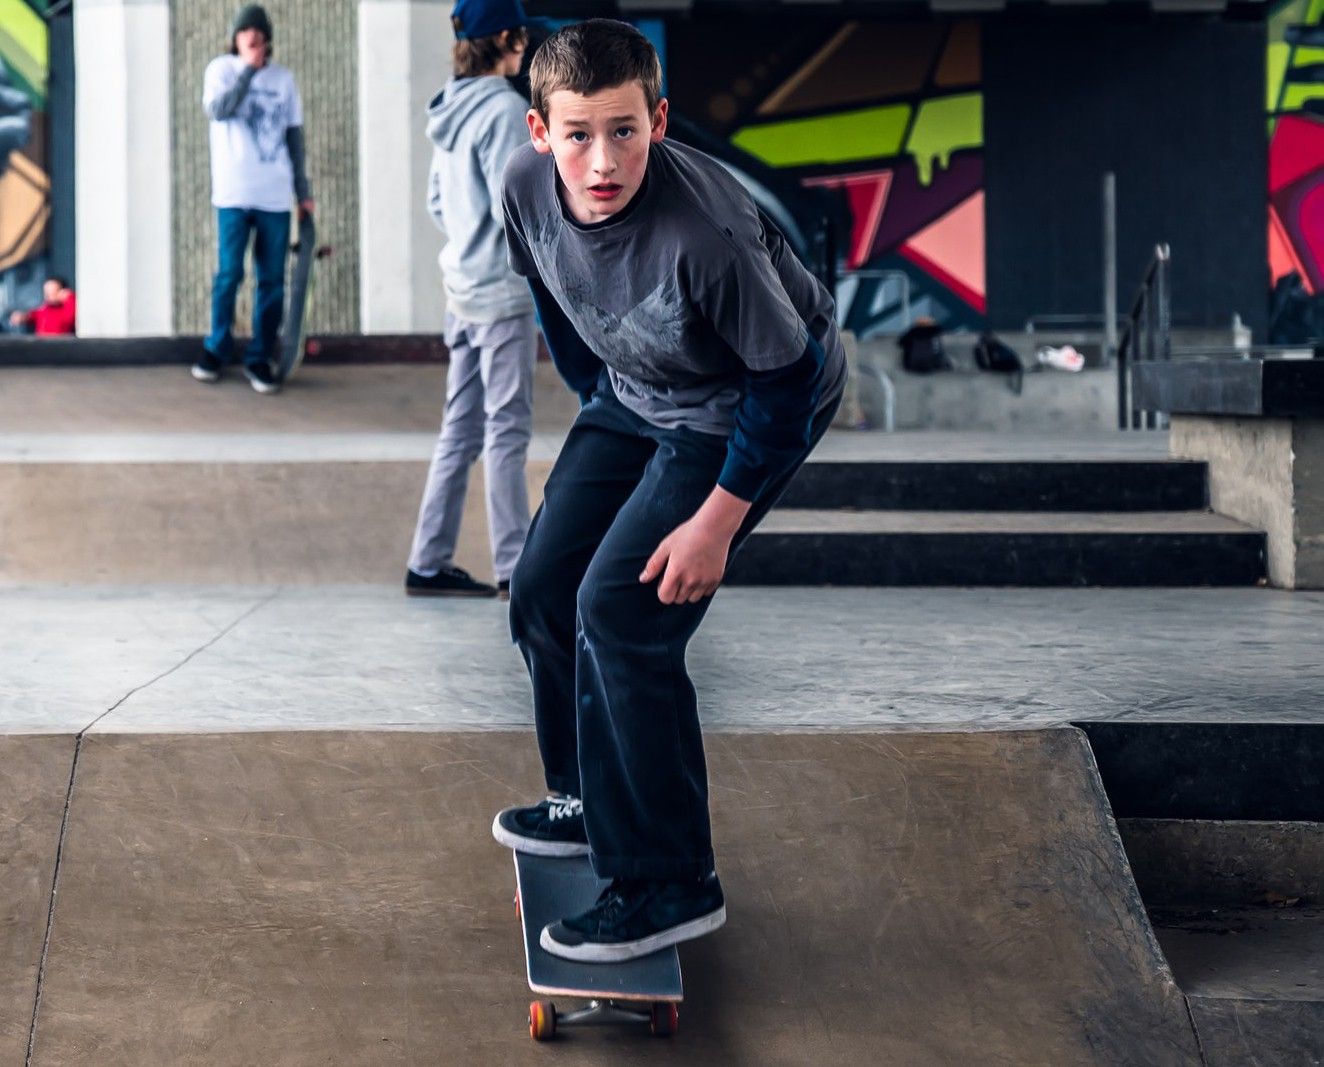 a boy skateboarding